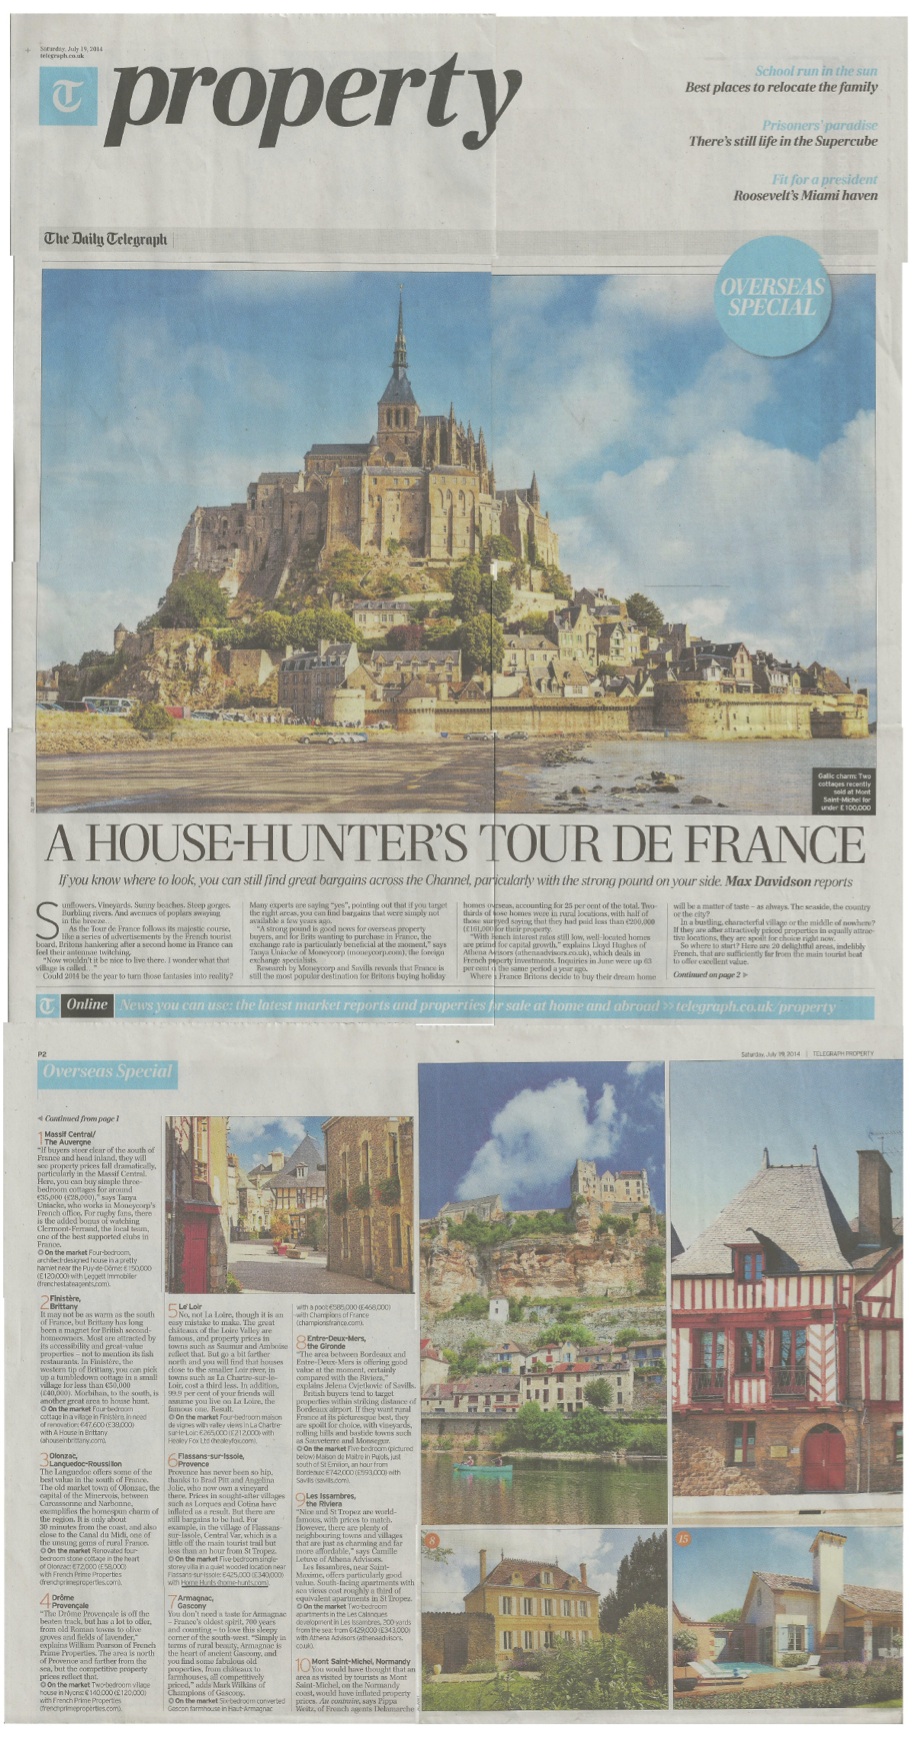 Daily Telegraph – A house hunters tour de France